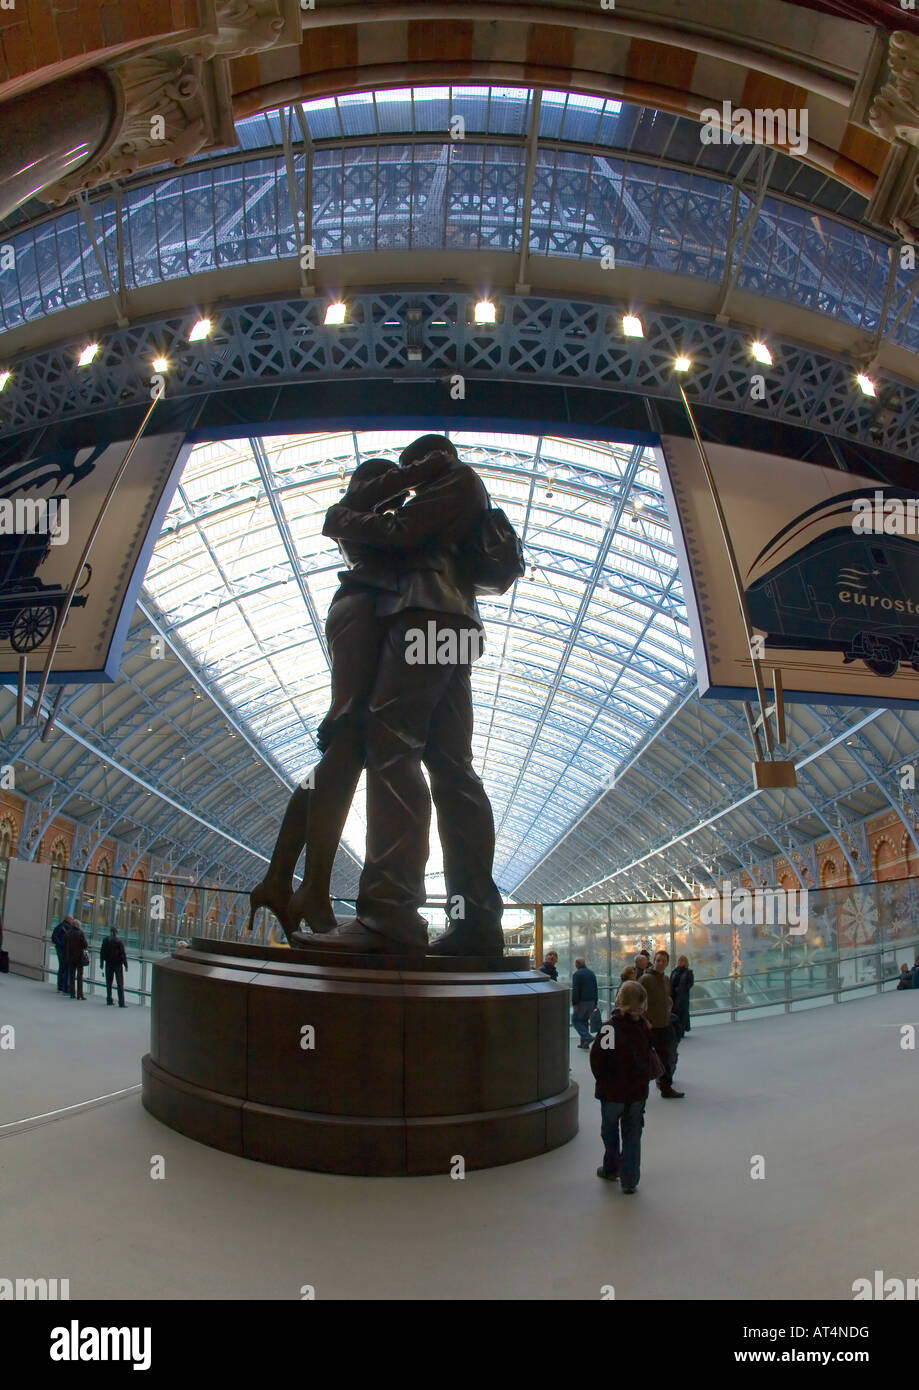 Meeting Place Bronze Sculpture St Pancras International Railway Station London England UK United Kingdom GB Stock Photo